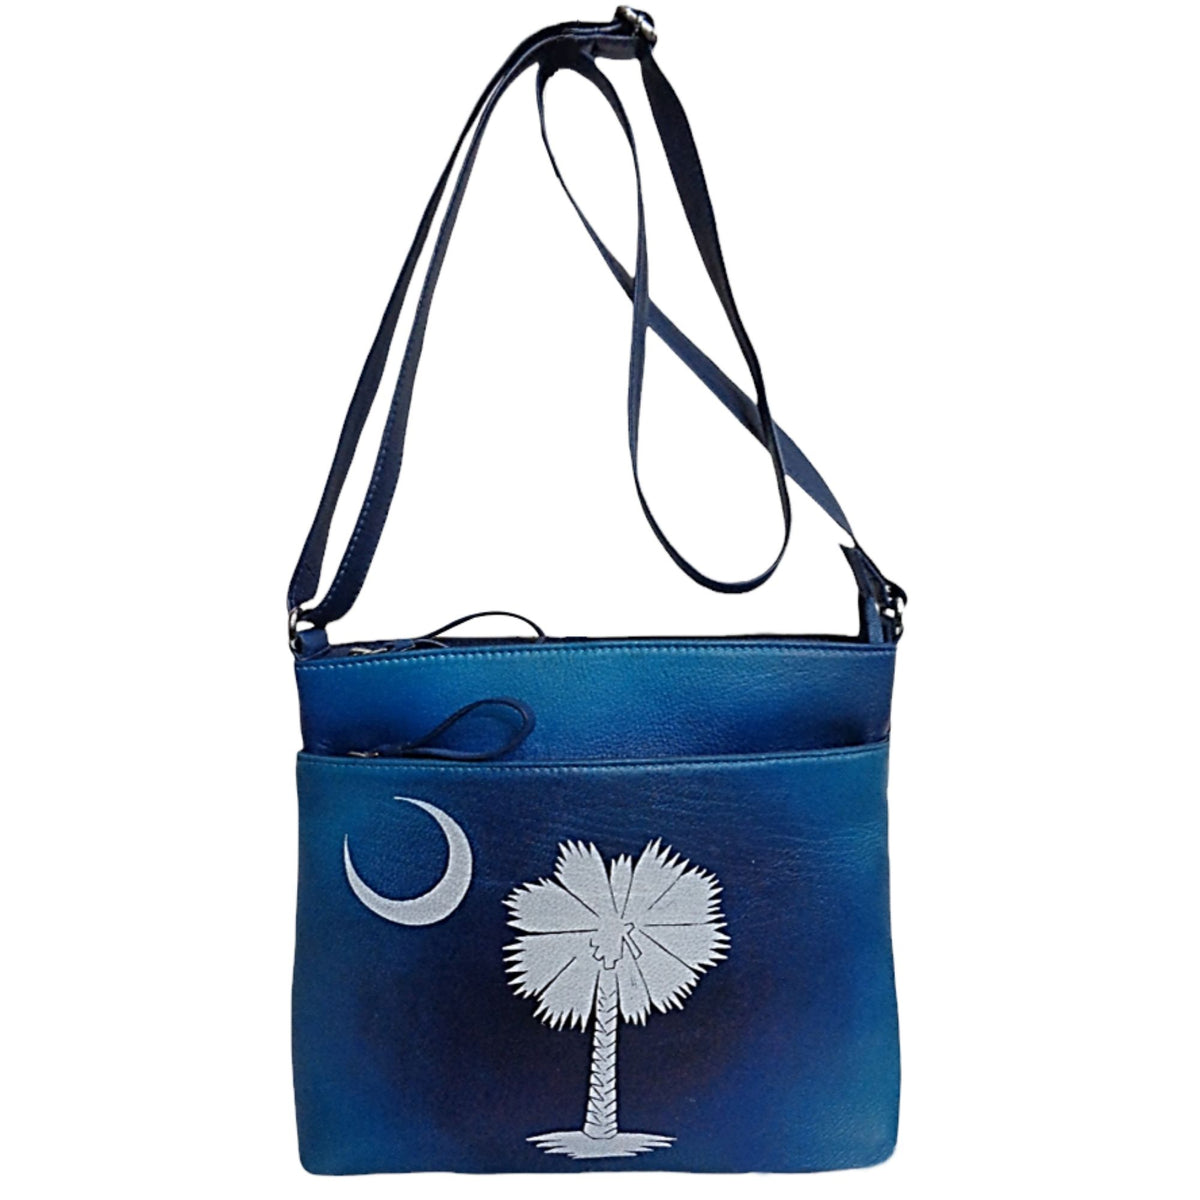 Collegiate Handbags - Palmetto Moon